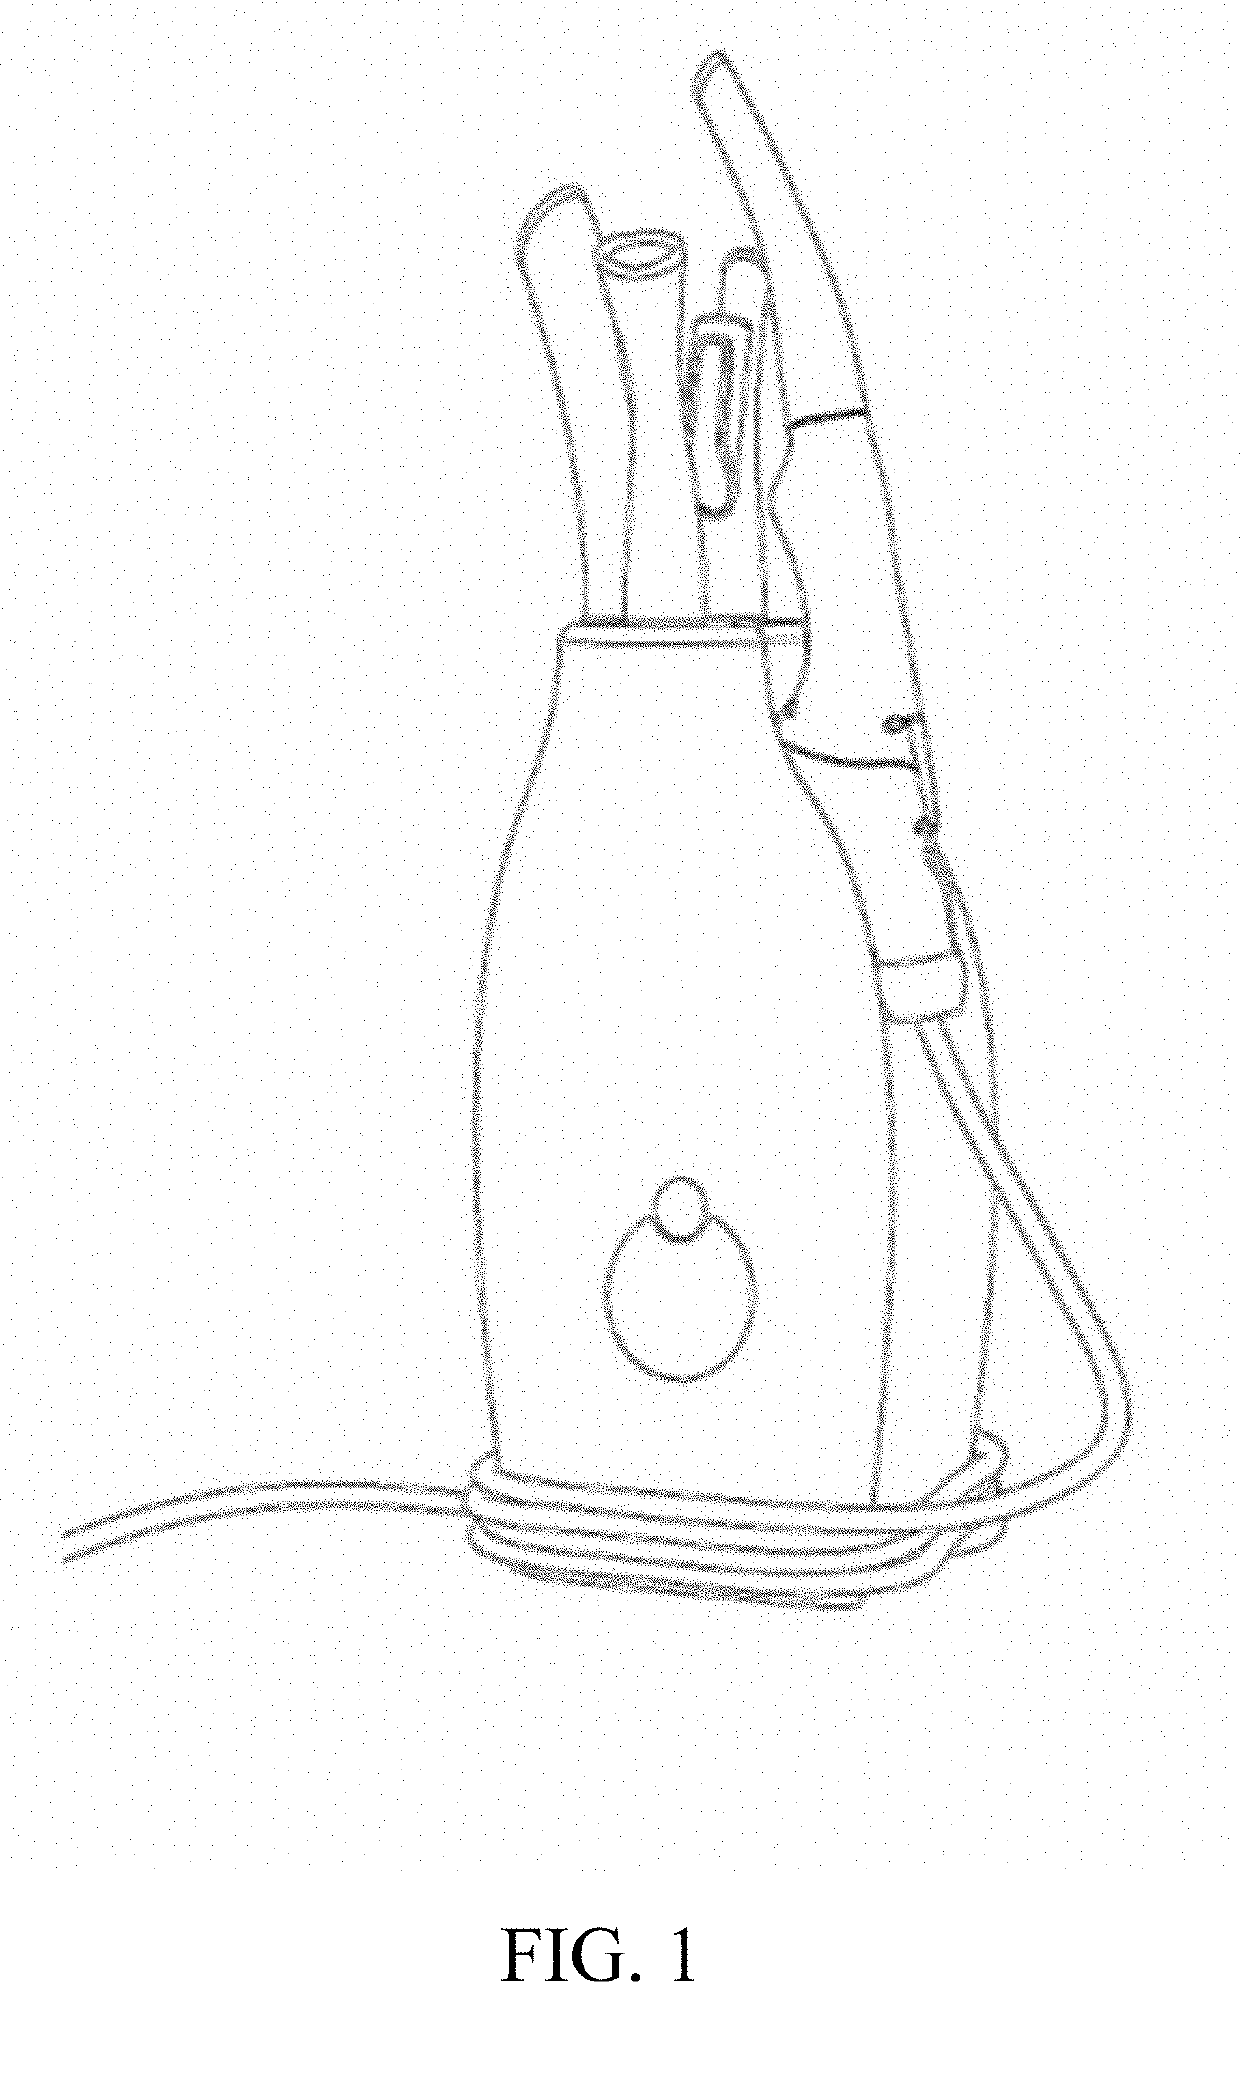 Handheld vacuum device with camera and illumination